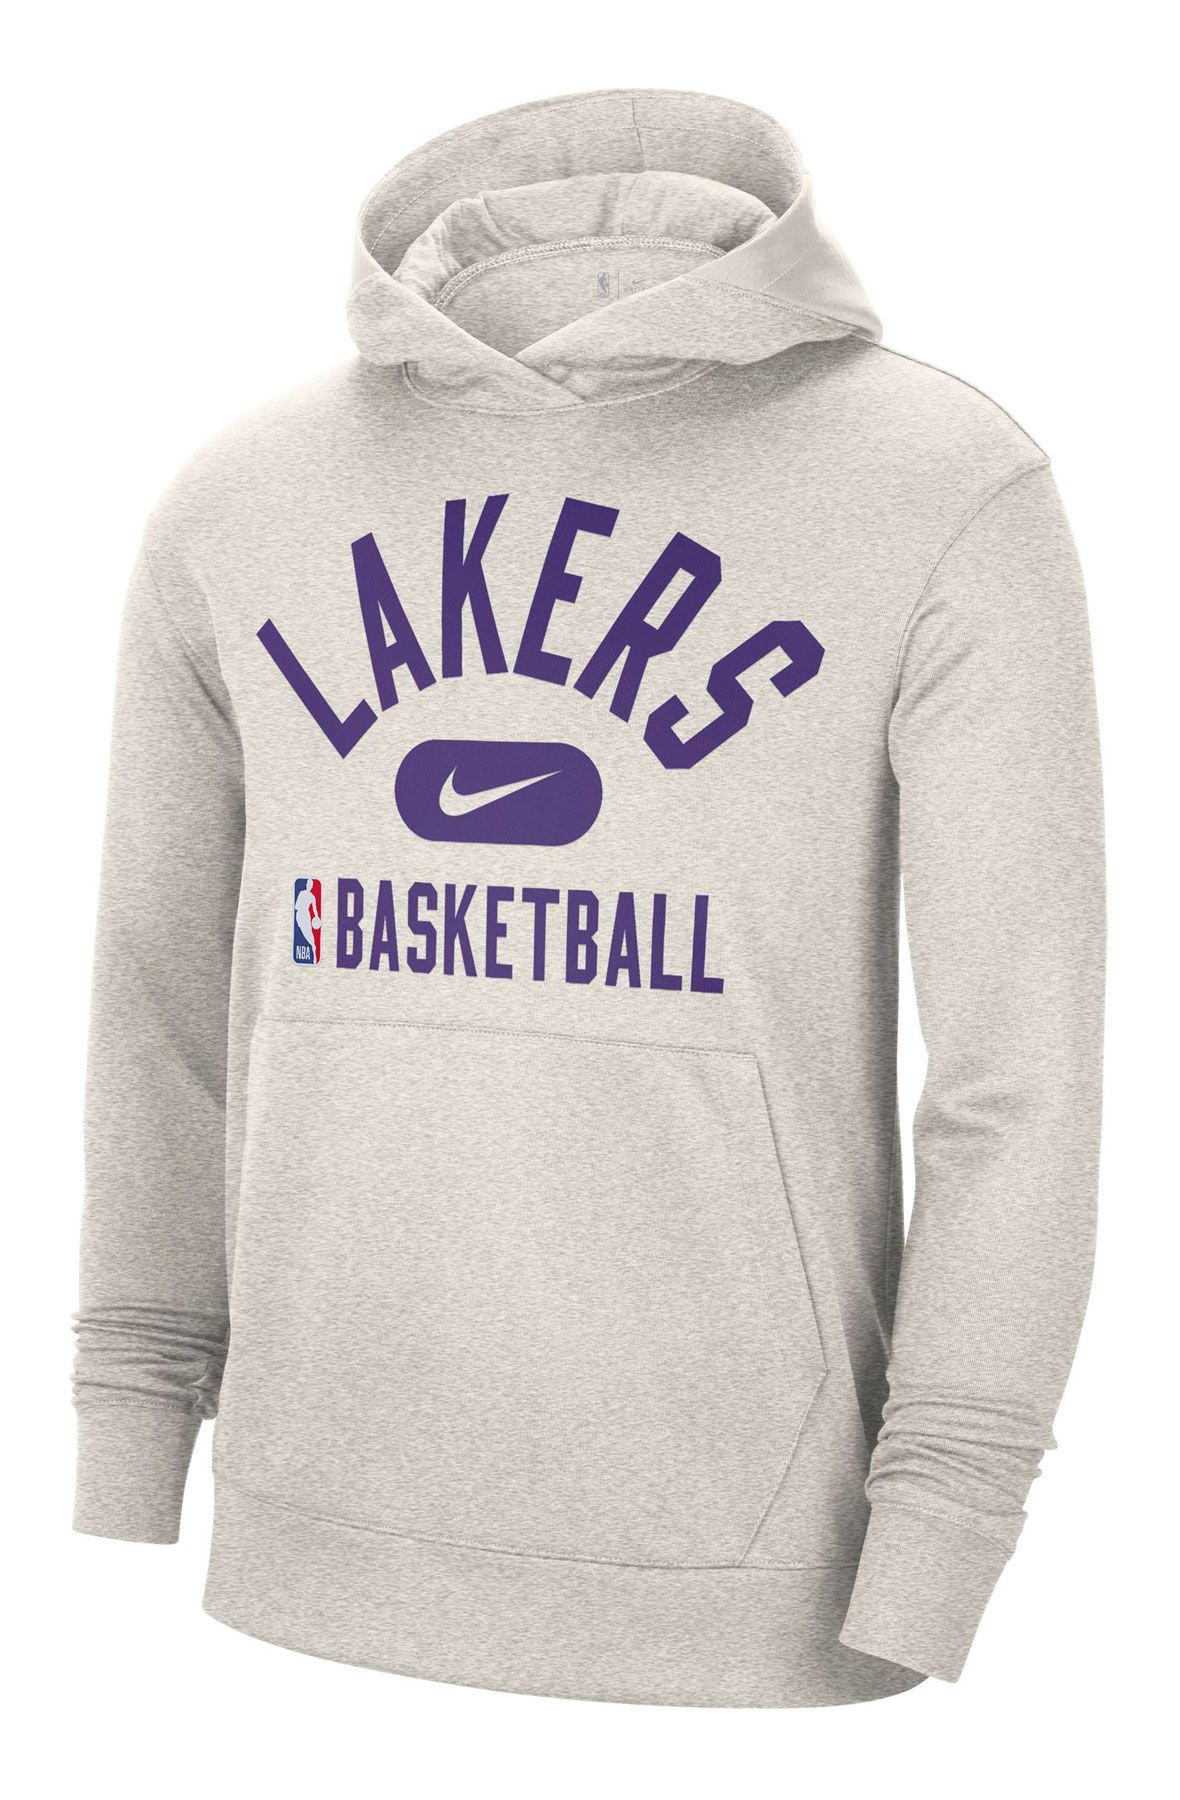 Nike Men's Los Angeles Lakers Nba Dry Practice T-shirt, Purple